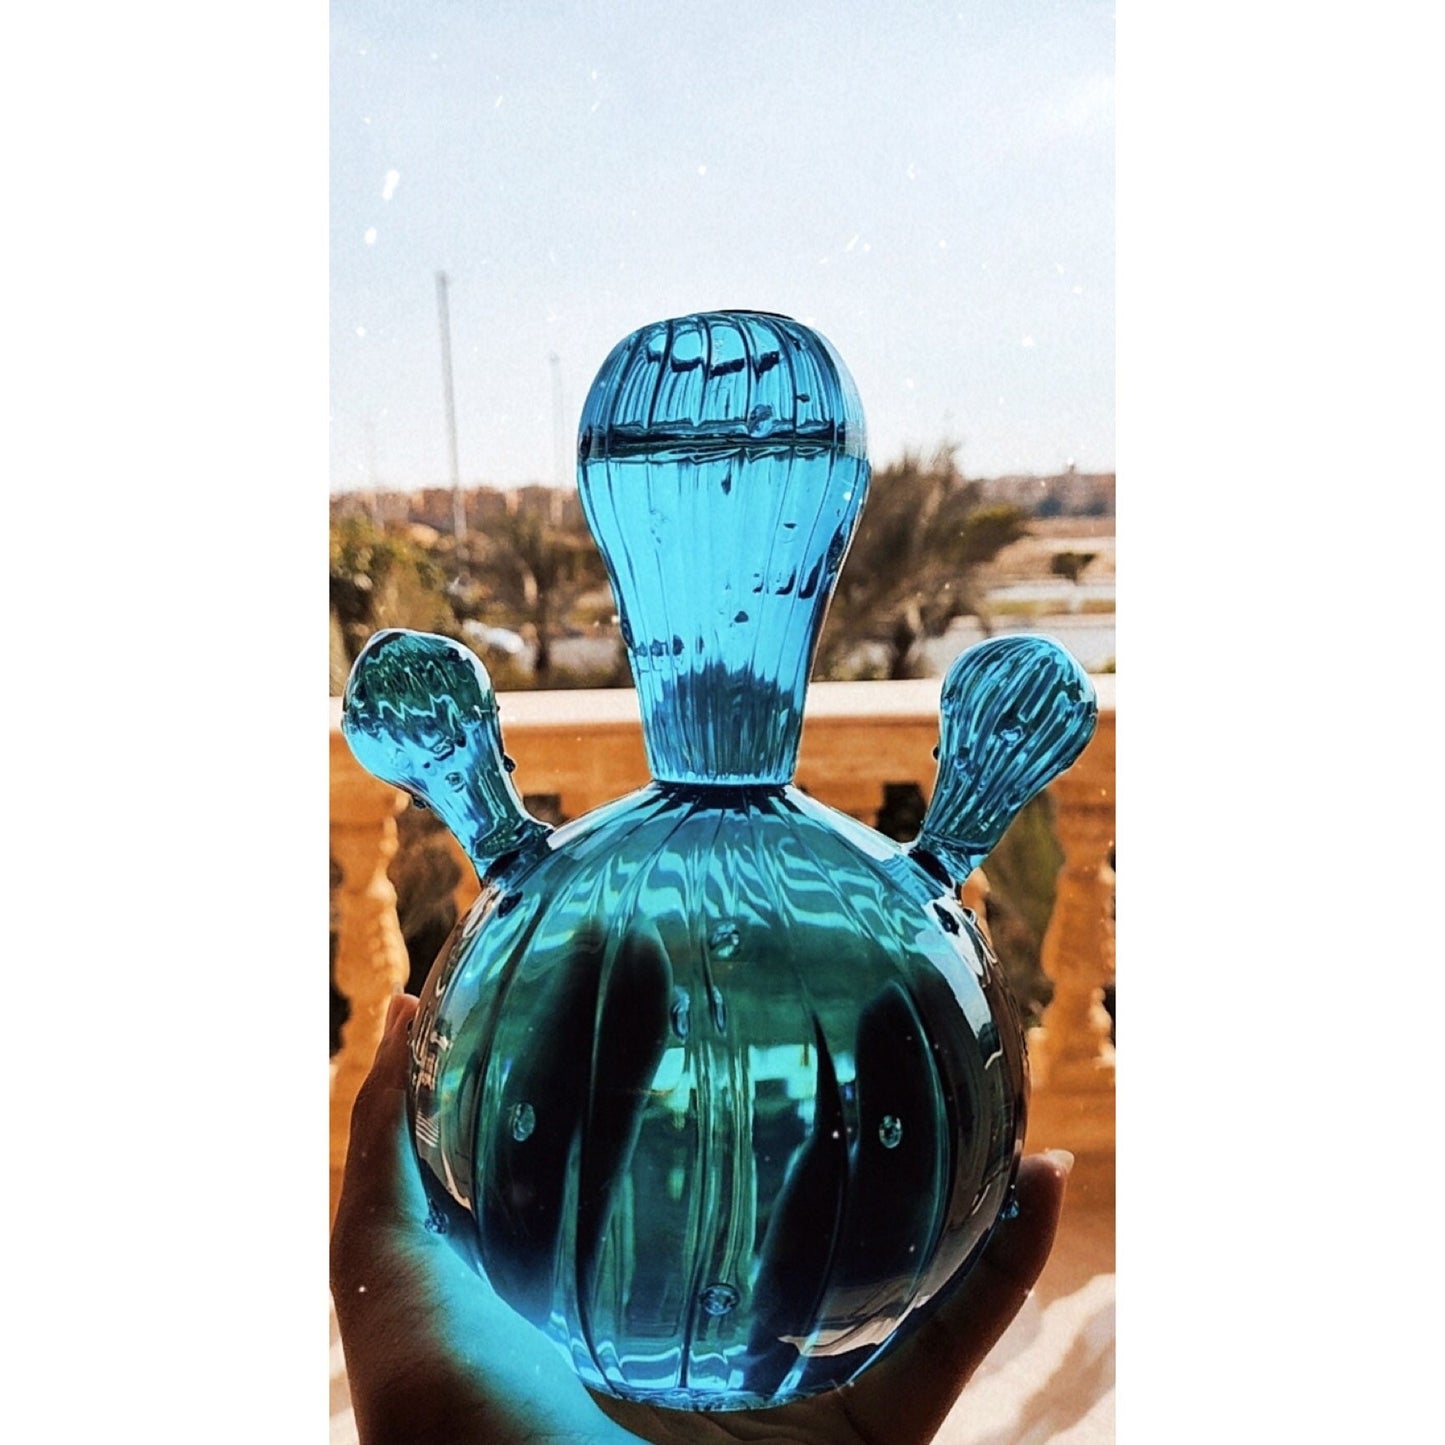 Cactus shaped Art Deco Vase , Hand blown Glassware , Blown glass vases , vintage glass vase , colored glass vases , vase for flowers